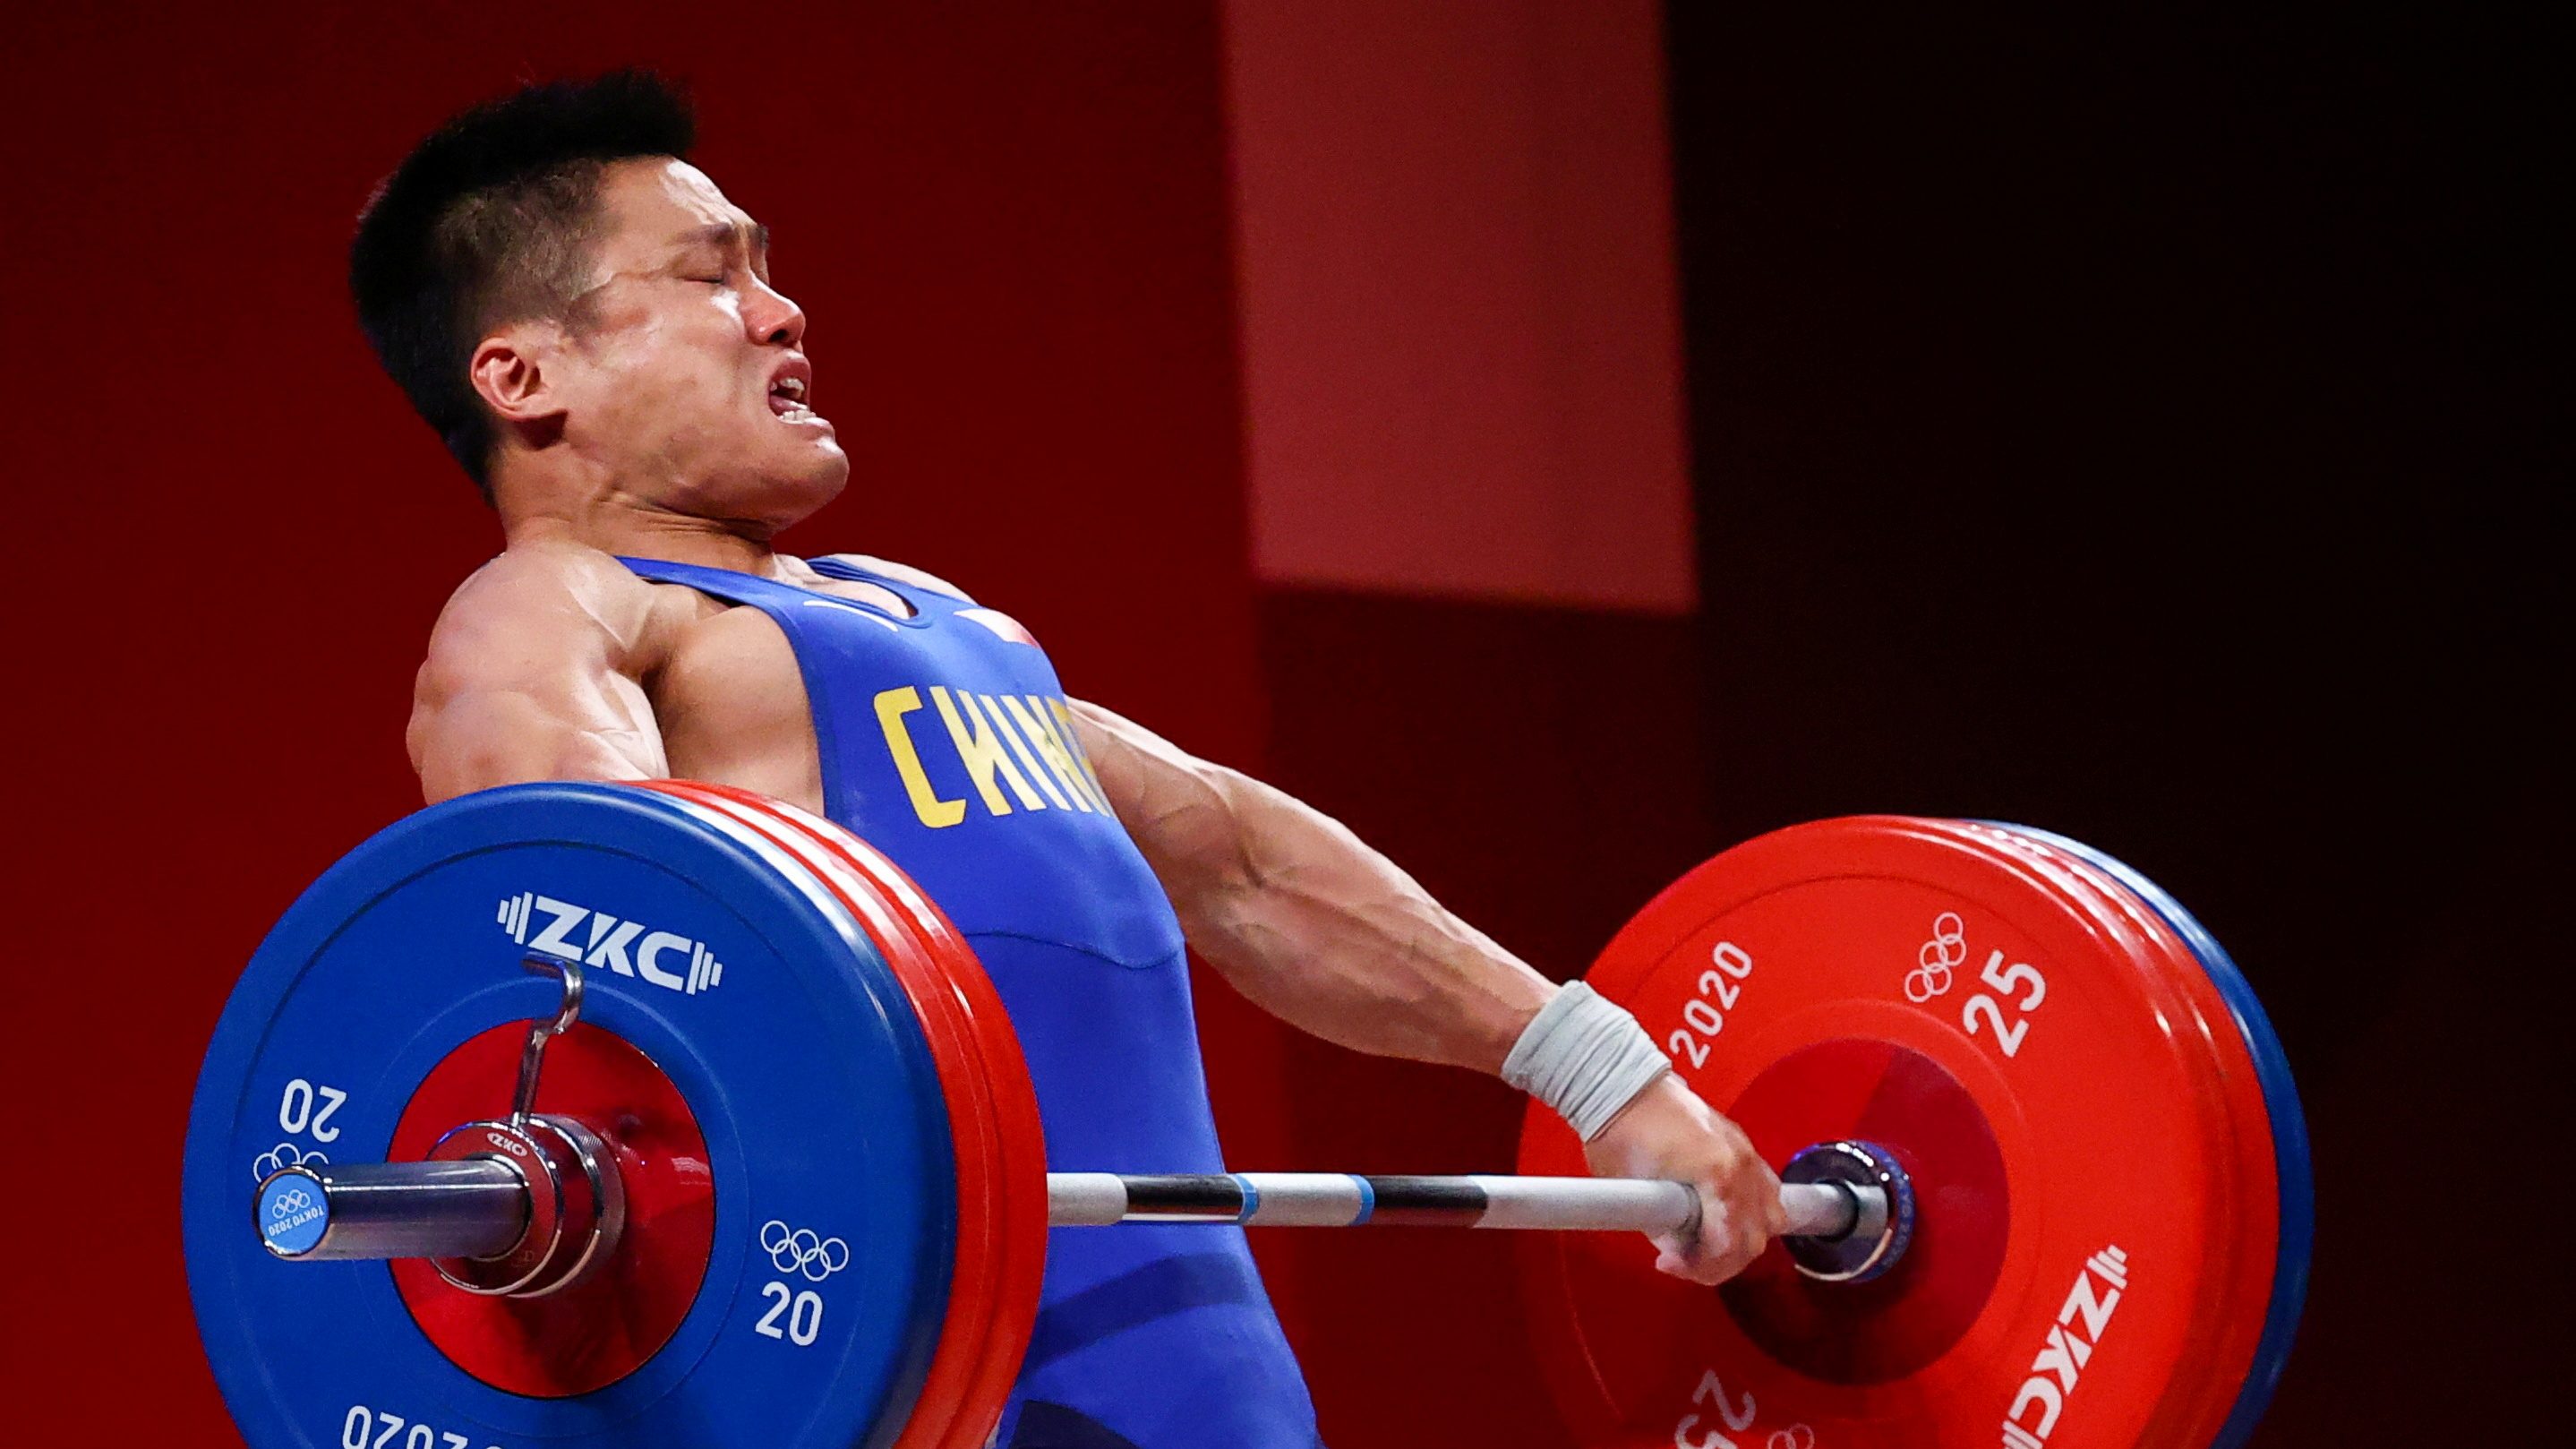 China’s veteran weightlifter Lyu wins gold in men’s 81 kg